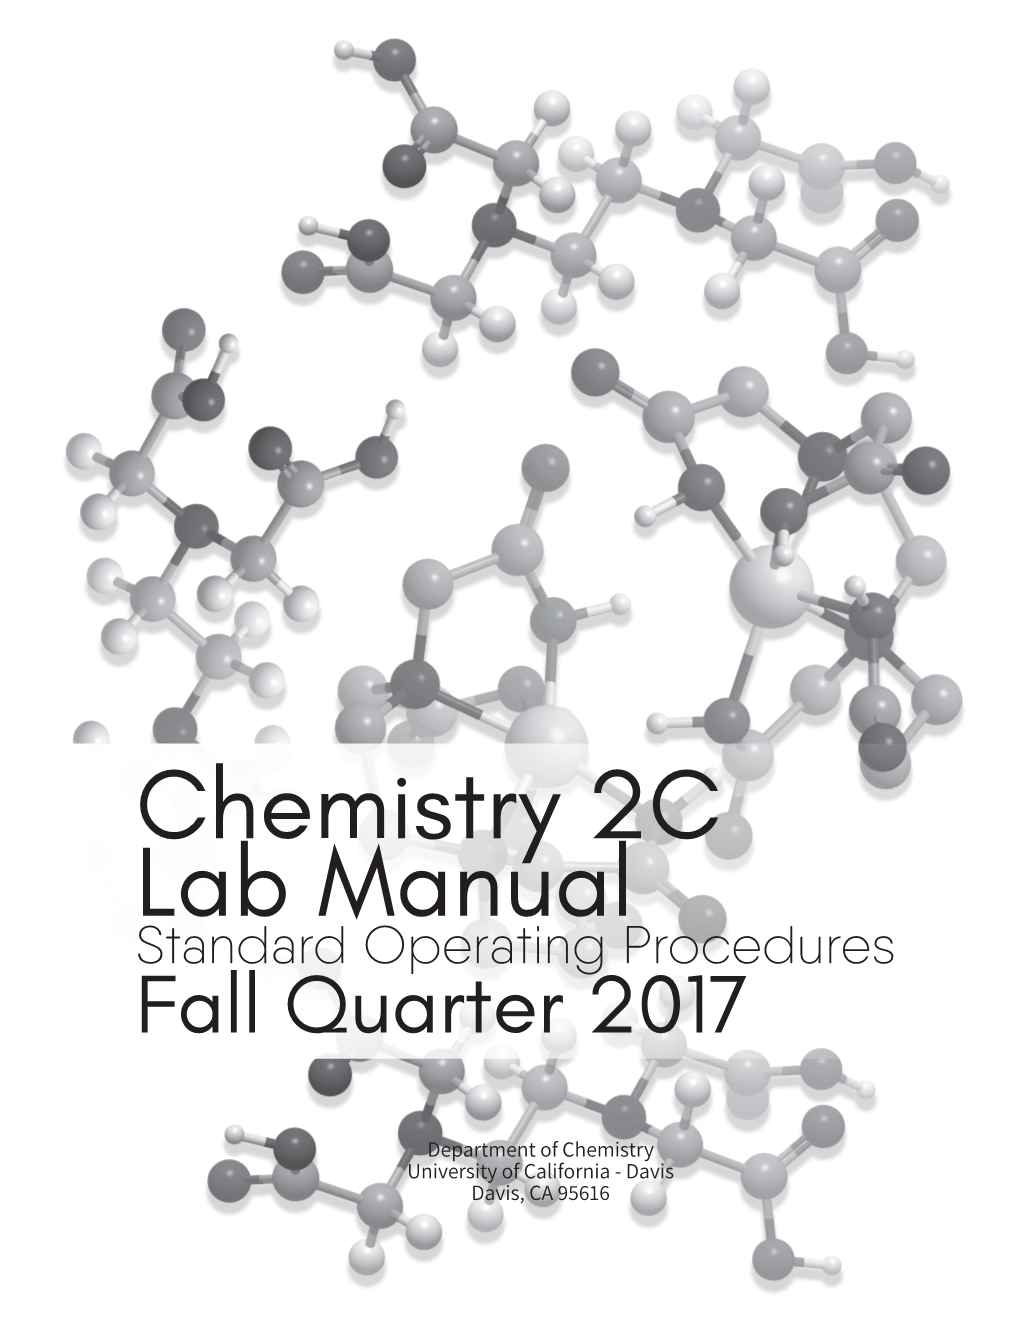 Chemistry 2C Lab Manual Standard Operating Procedures Fall Quarter 2017